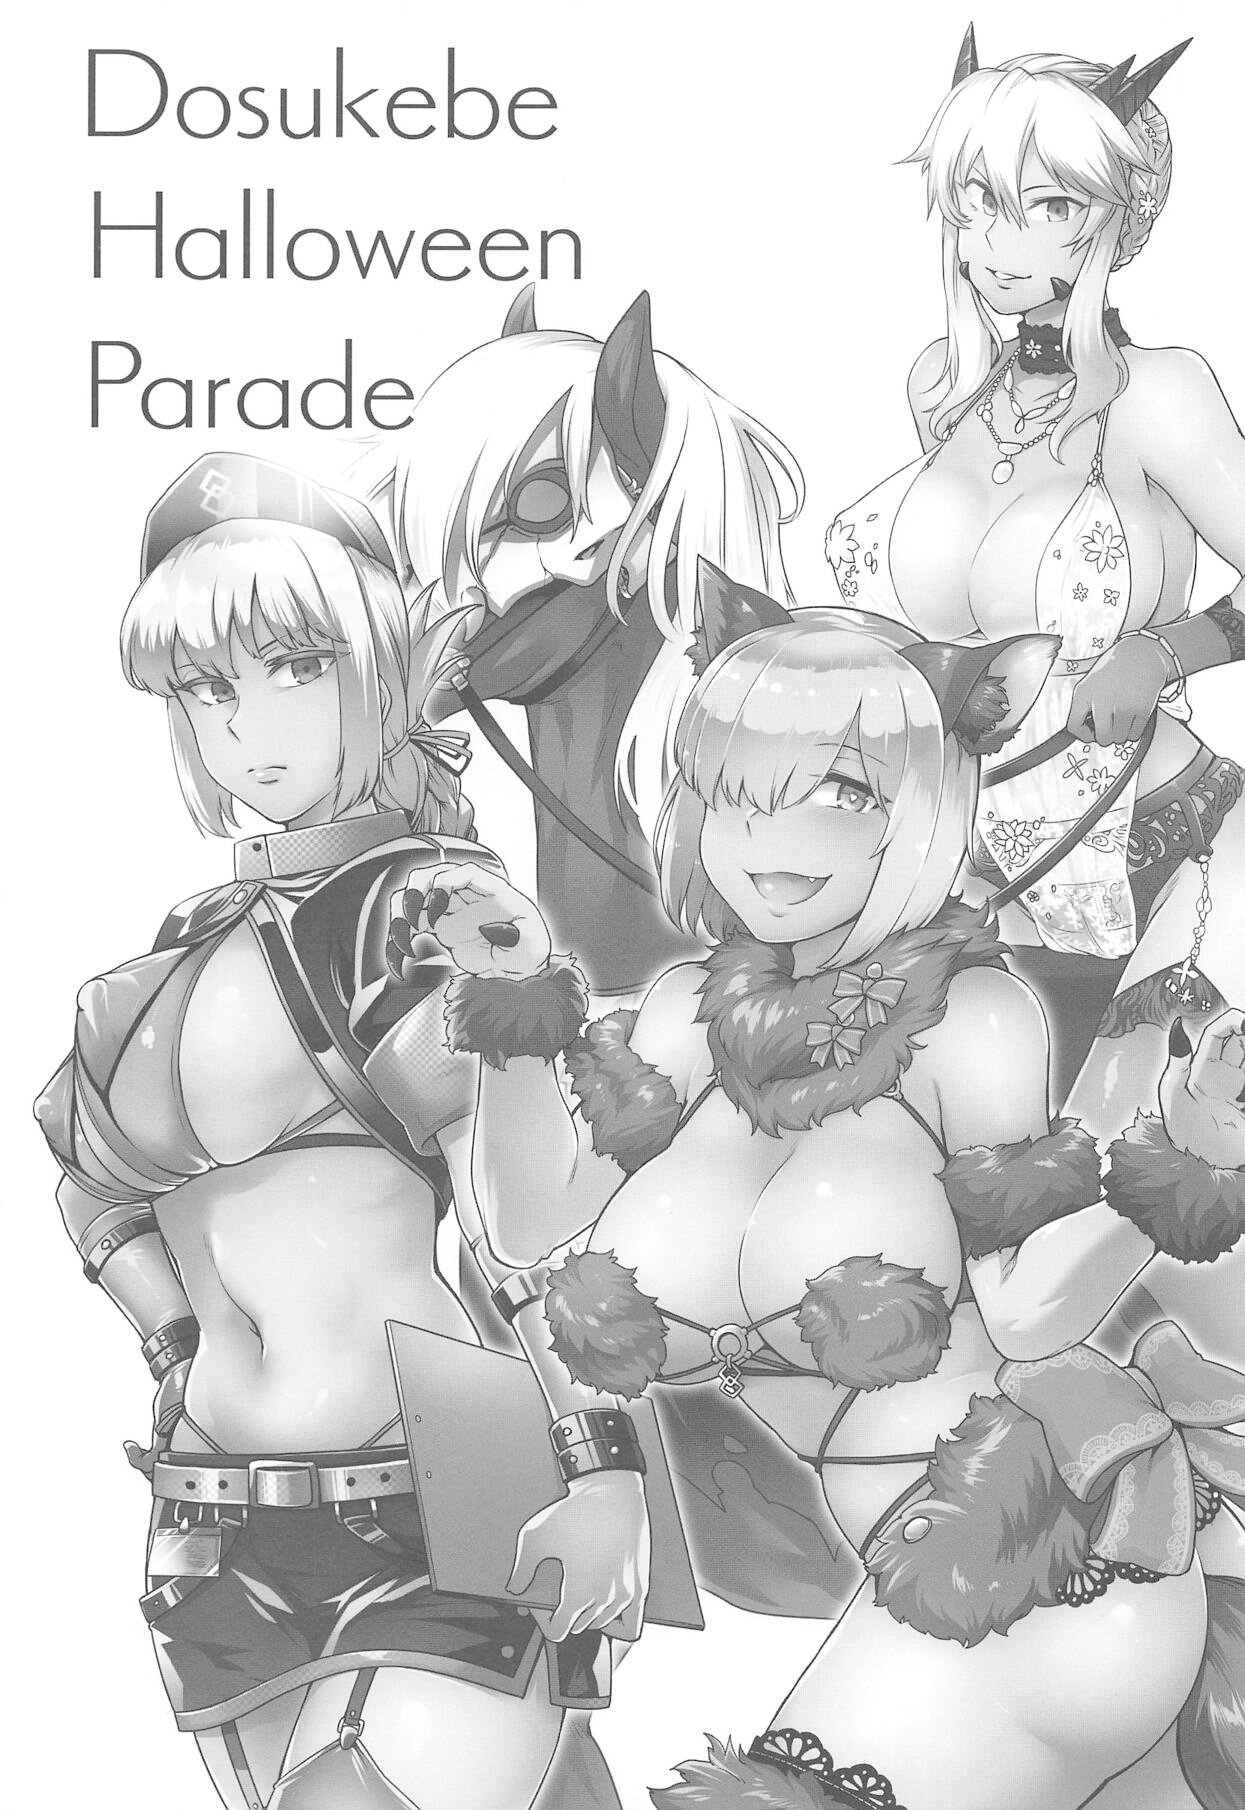 Dosukebe Halloween Parade - 2